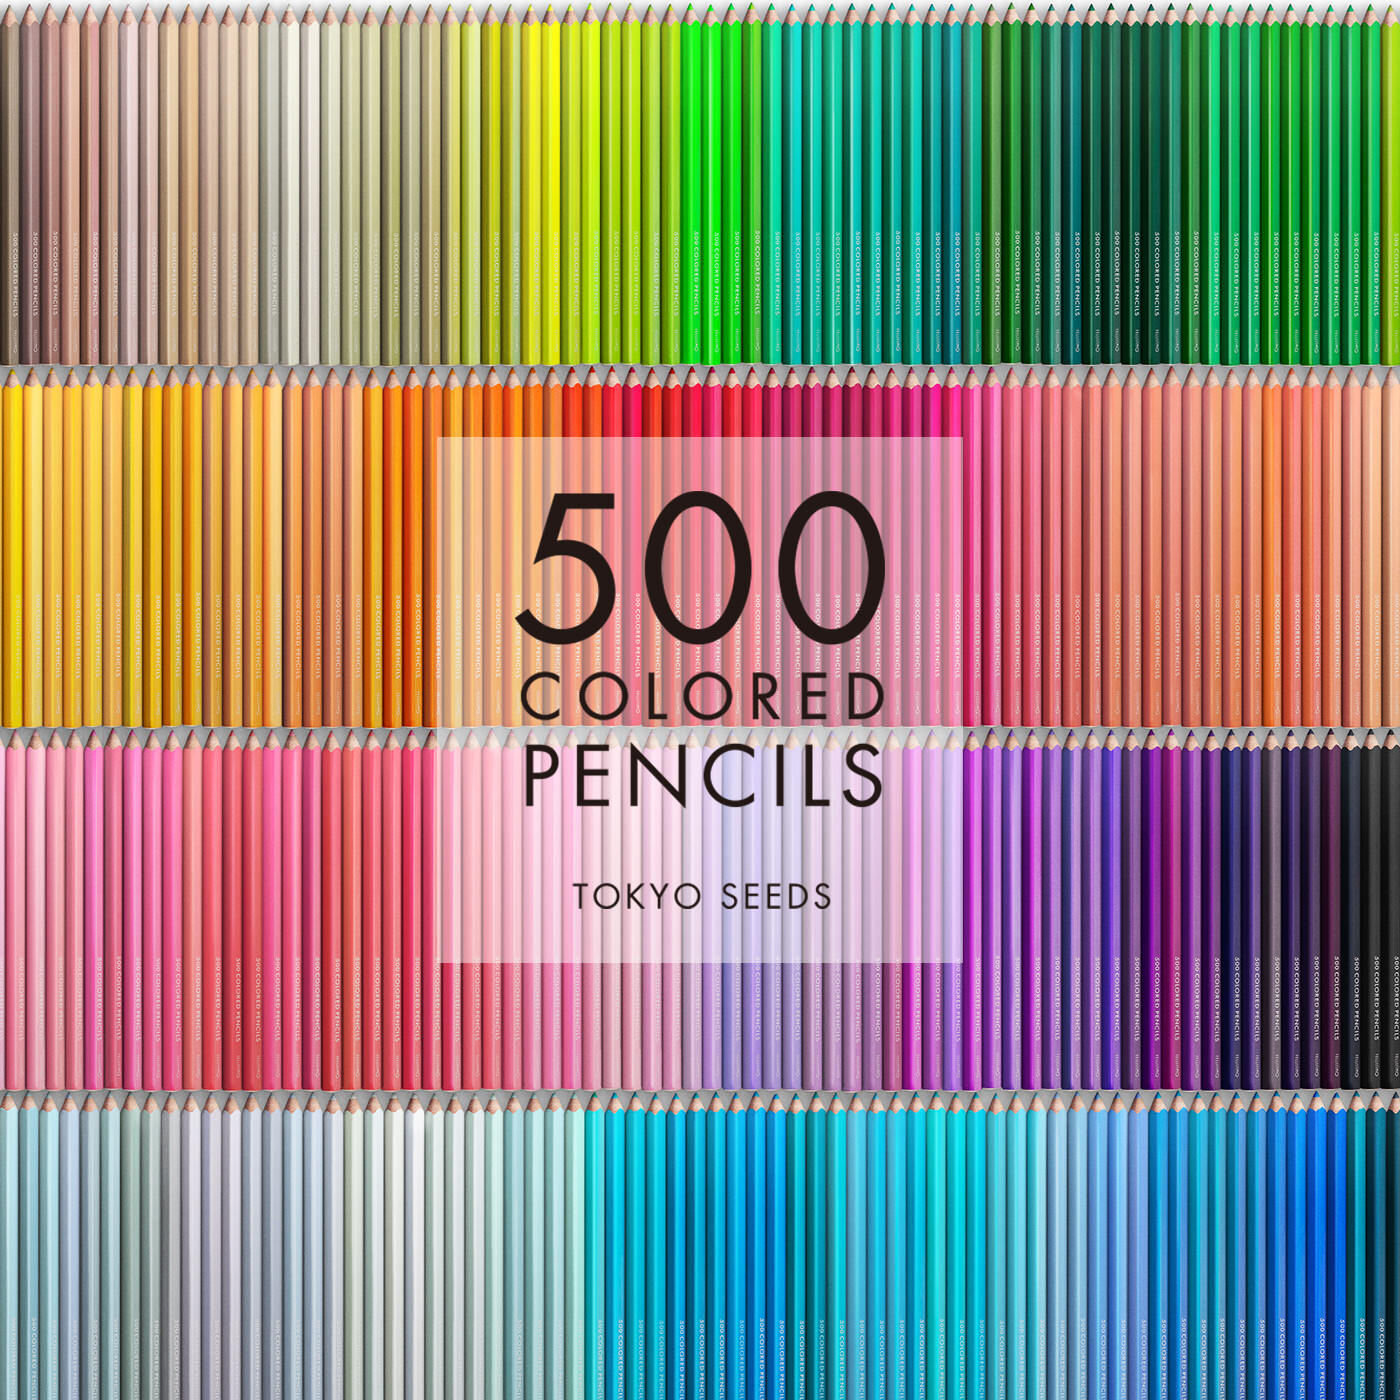 Real Stock|【392/500 PALACE SHEETS】500色の色えんぴつ TOKYO SEEDS|1992年、世界初の「500色」という膨大な色数の色えんぴつが誕生して以来、その販売数は発売当初から合わせると、世界55ヵ国10万セット以上。今回、メイド・イン・ジャパンにこだわり、すべてが新しく生まれ変わって登場しました。